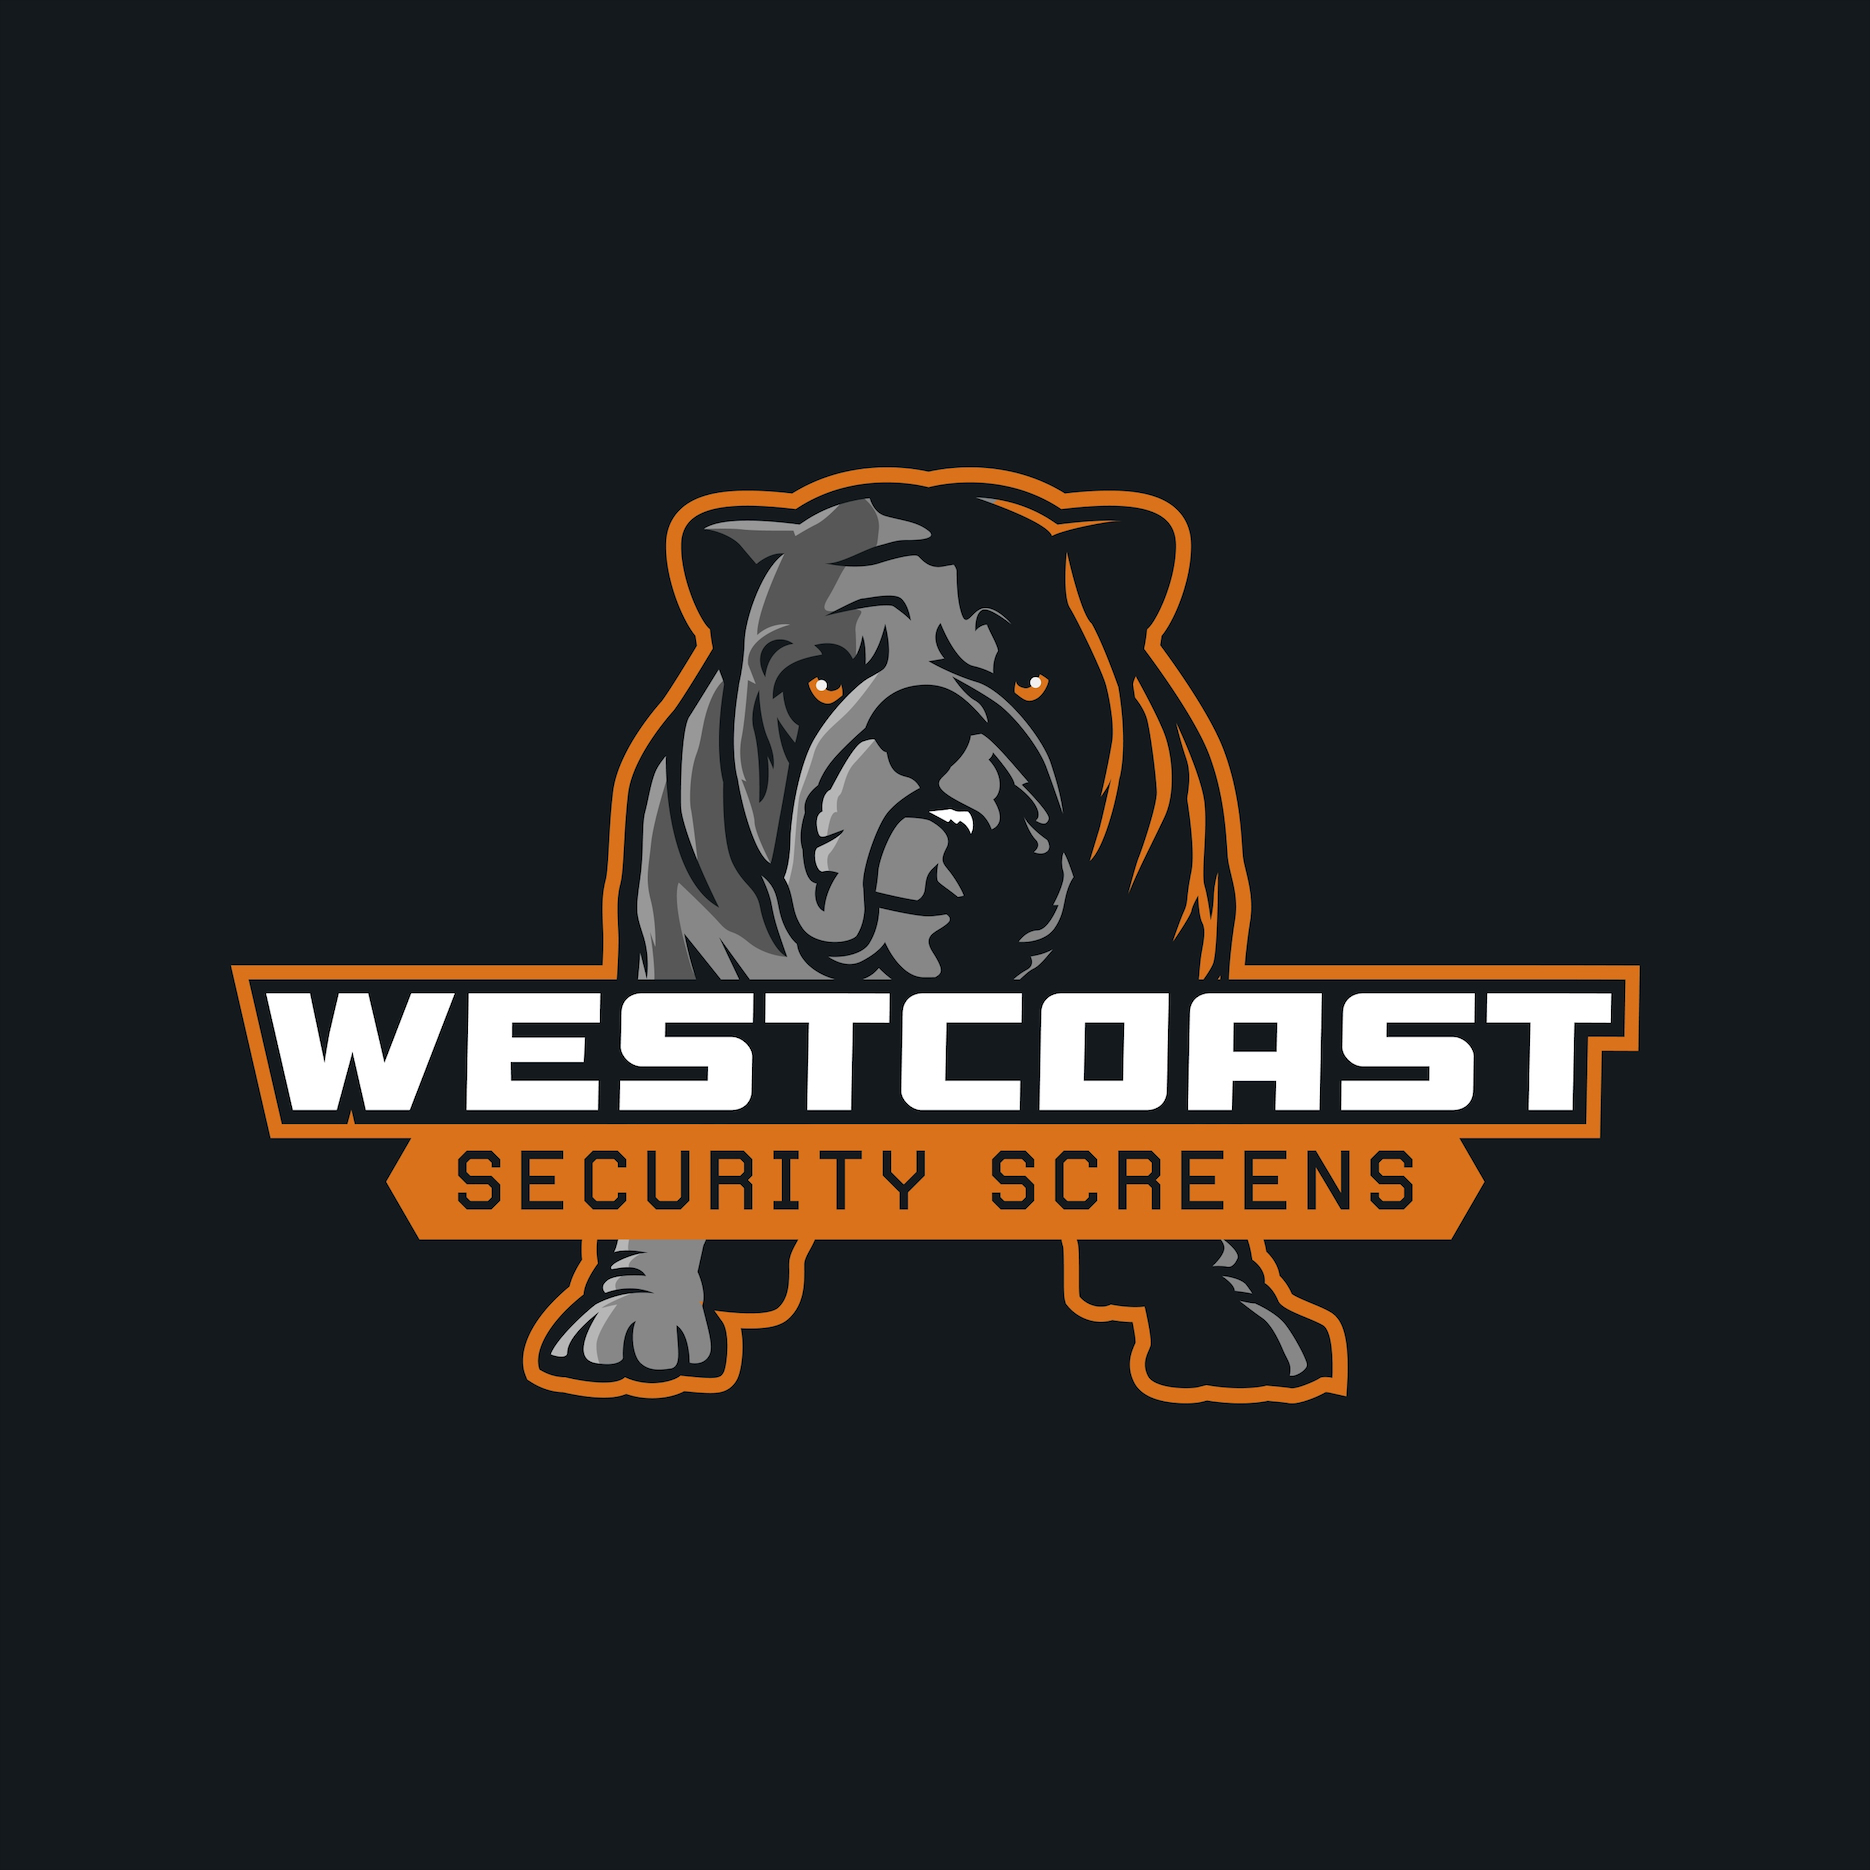 Westcoast security screens logo